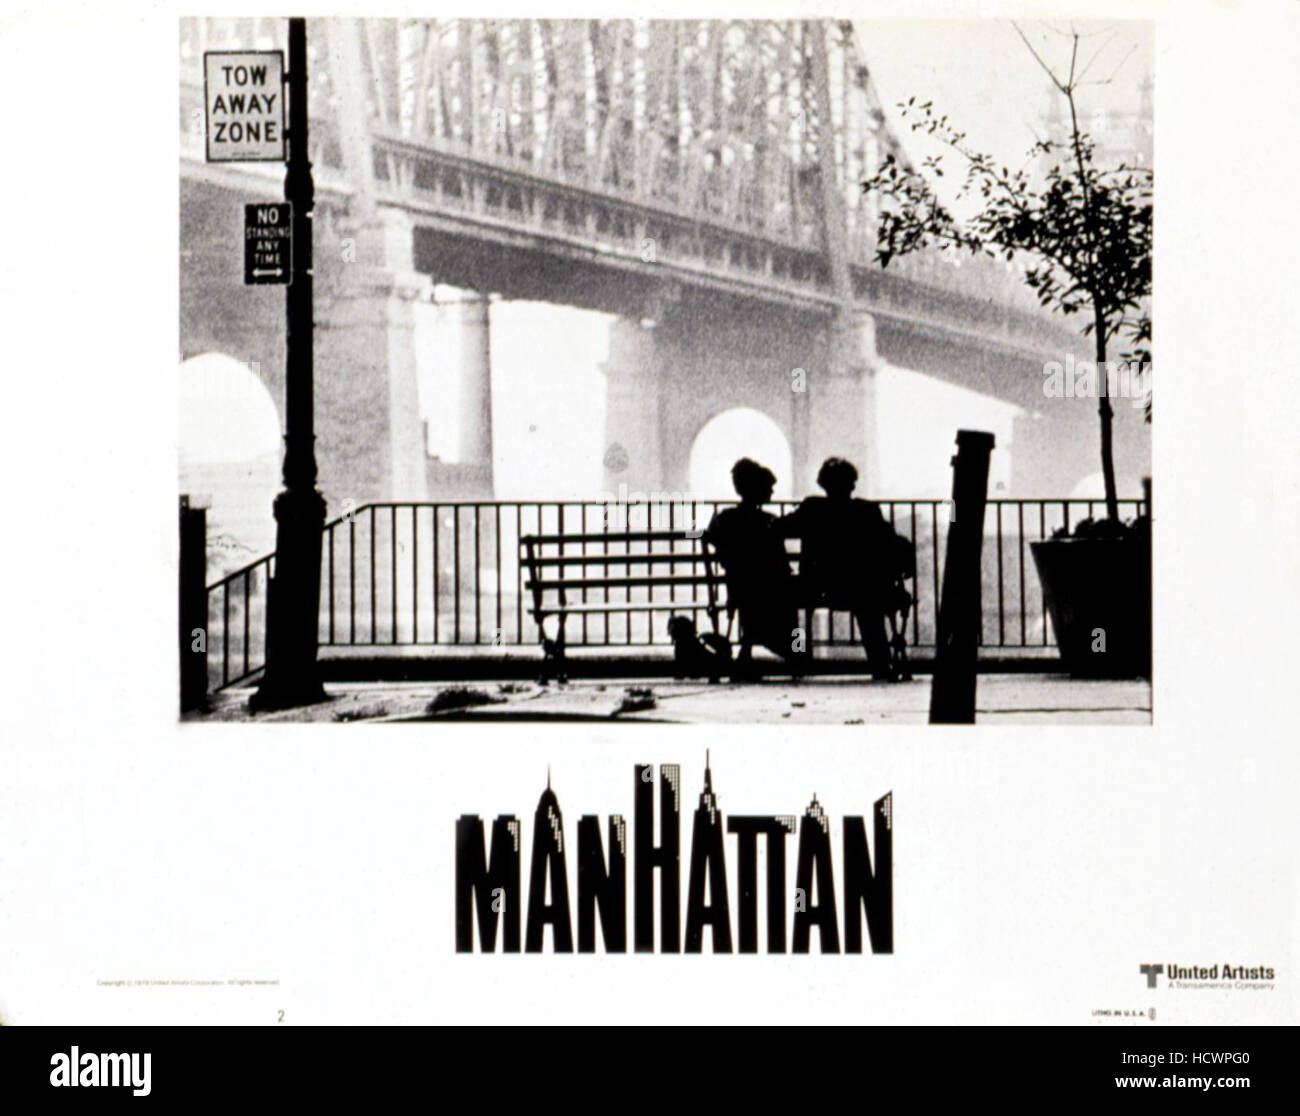 Poster A3 Manhattan Woody Allen Pelicula Film Cartel Decor Impresion 01 